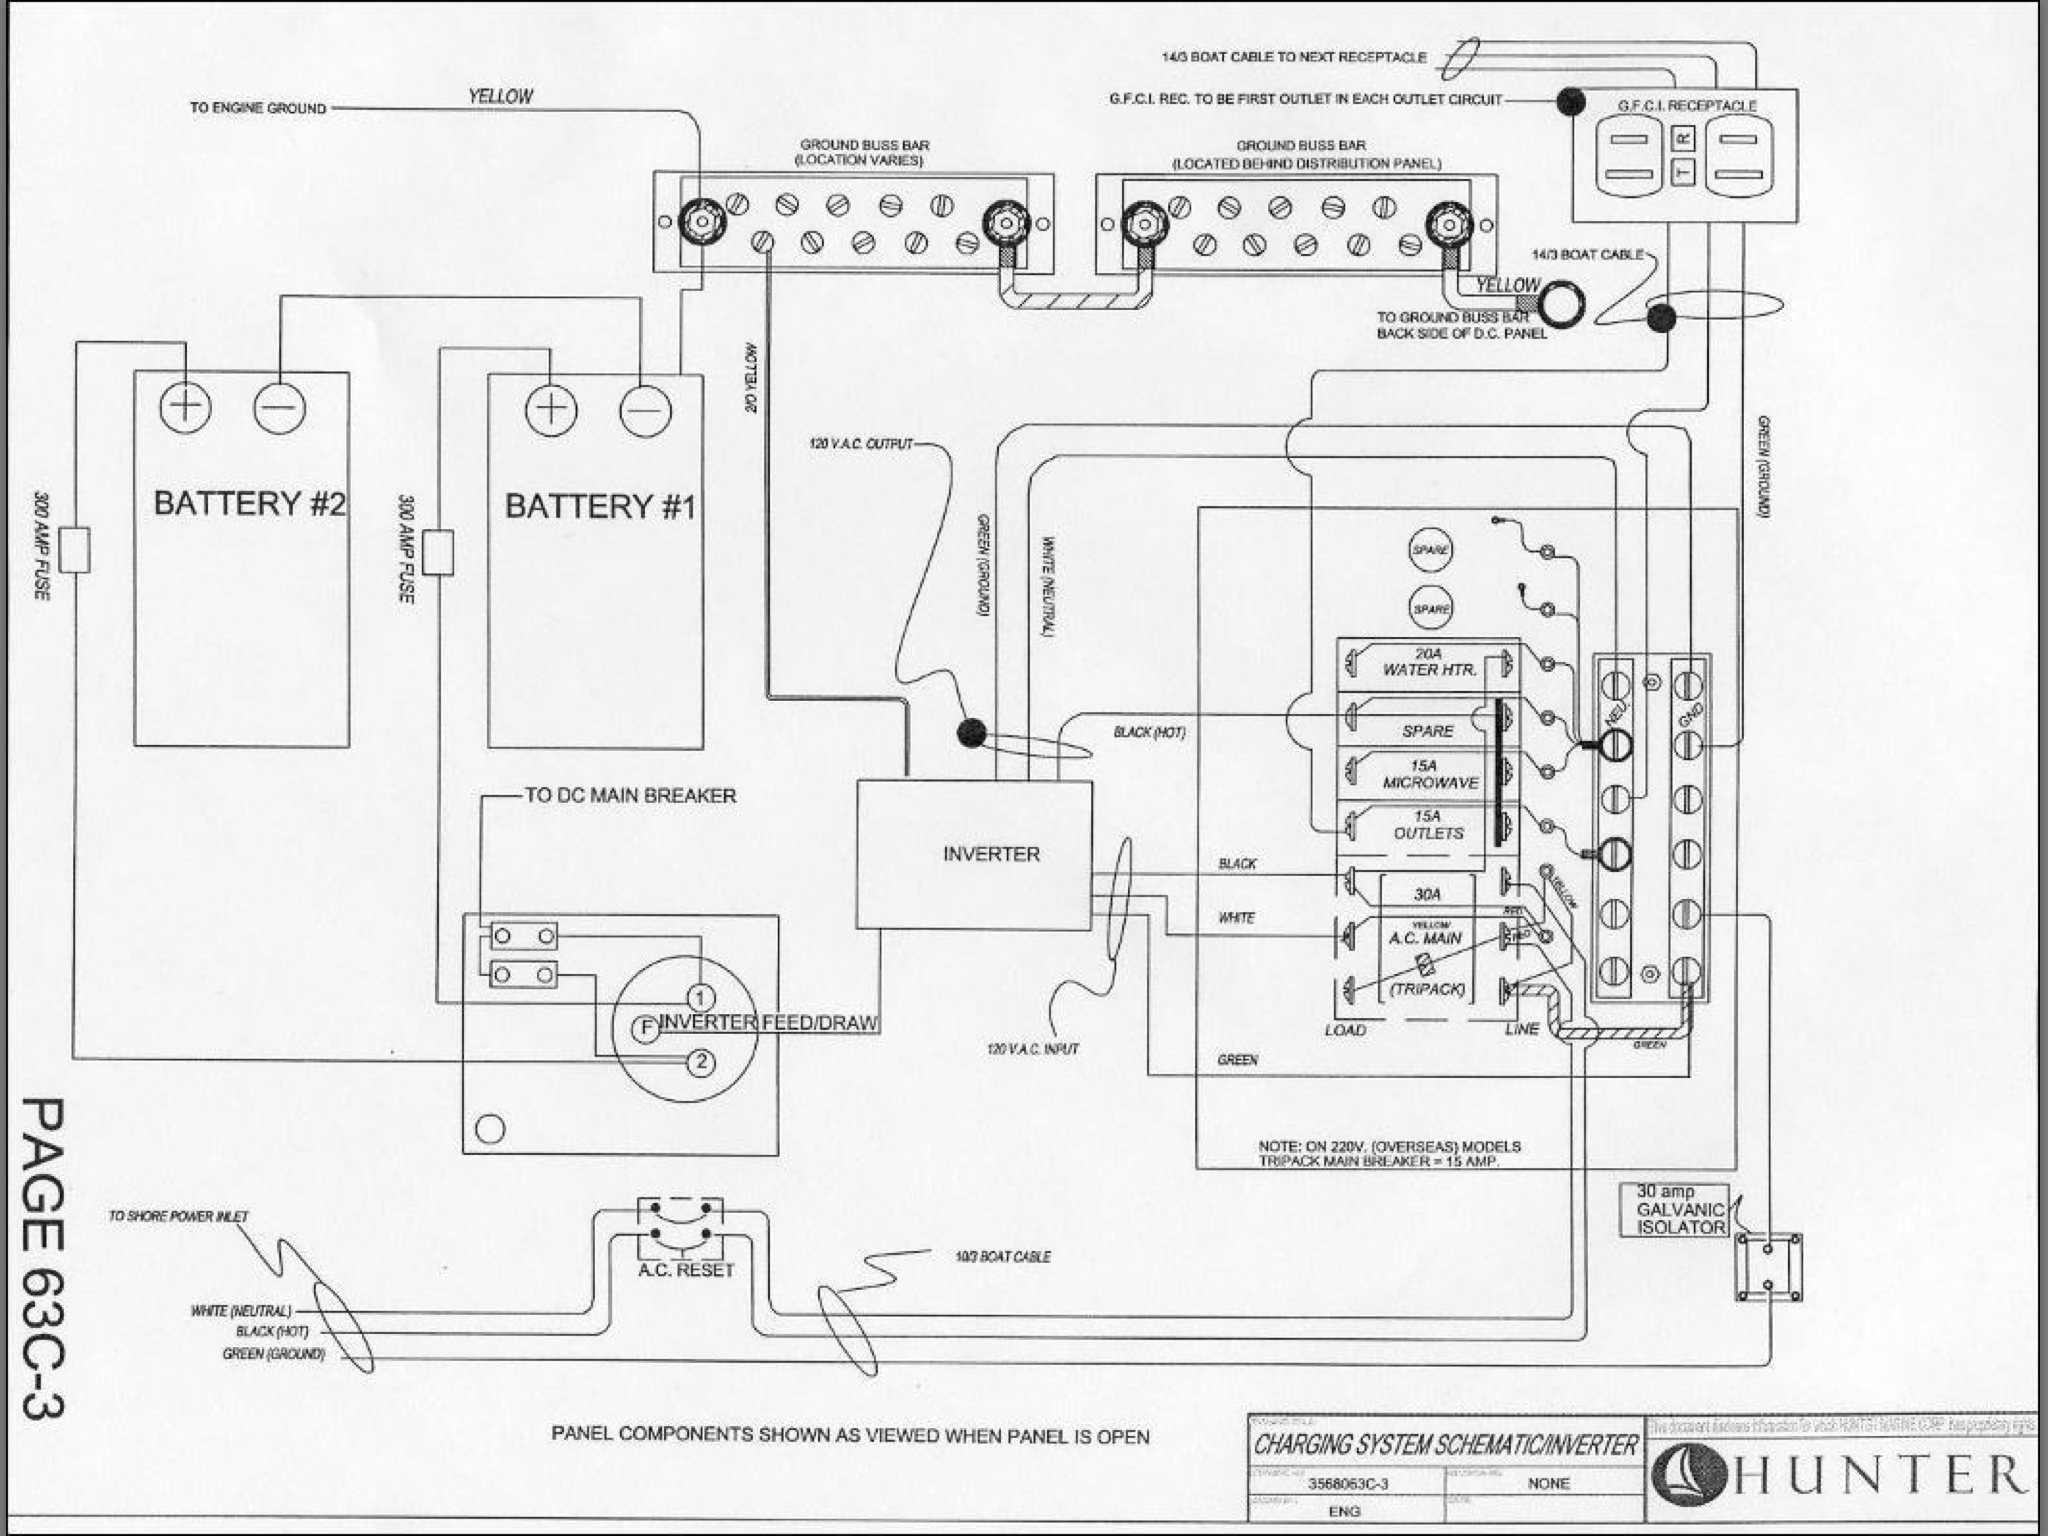 Promariner Battery Isolator Wiring Diagram : 42 Wiring